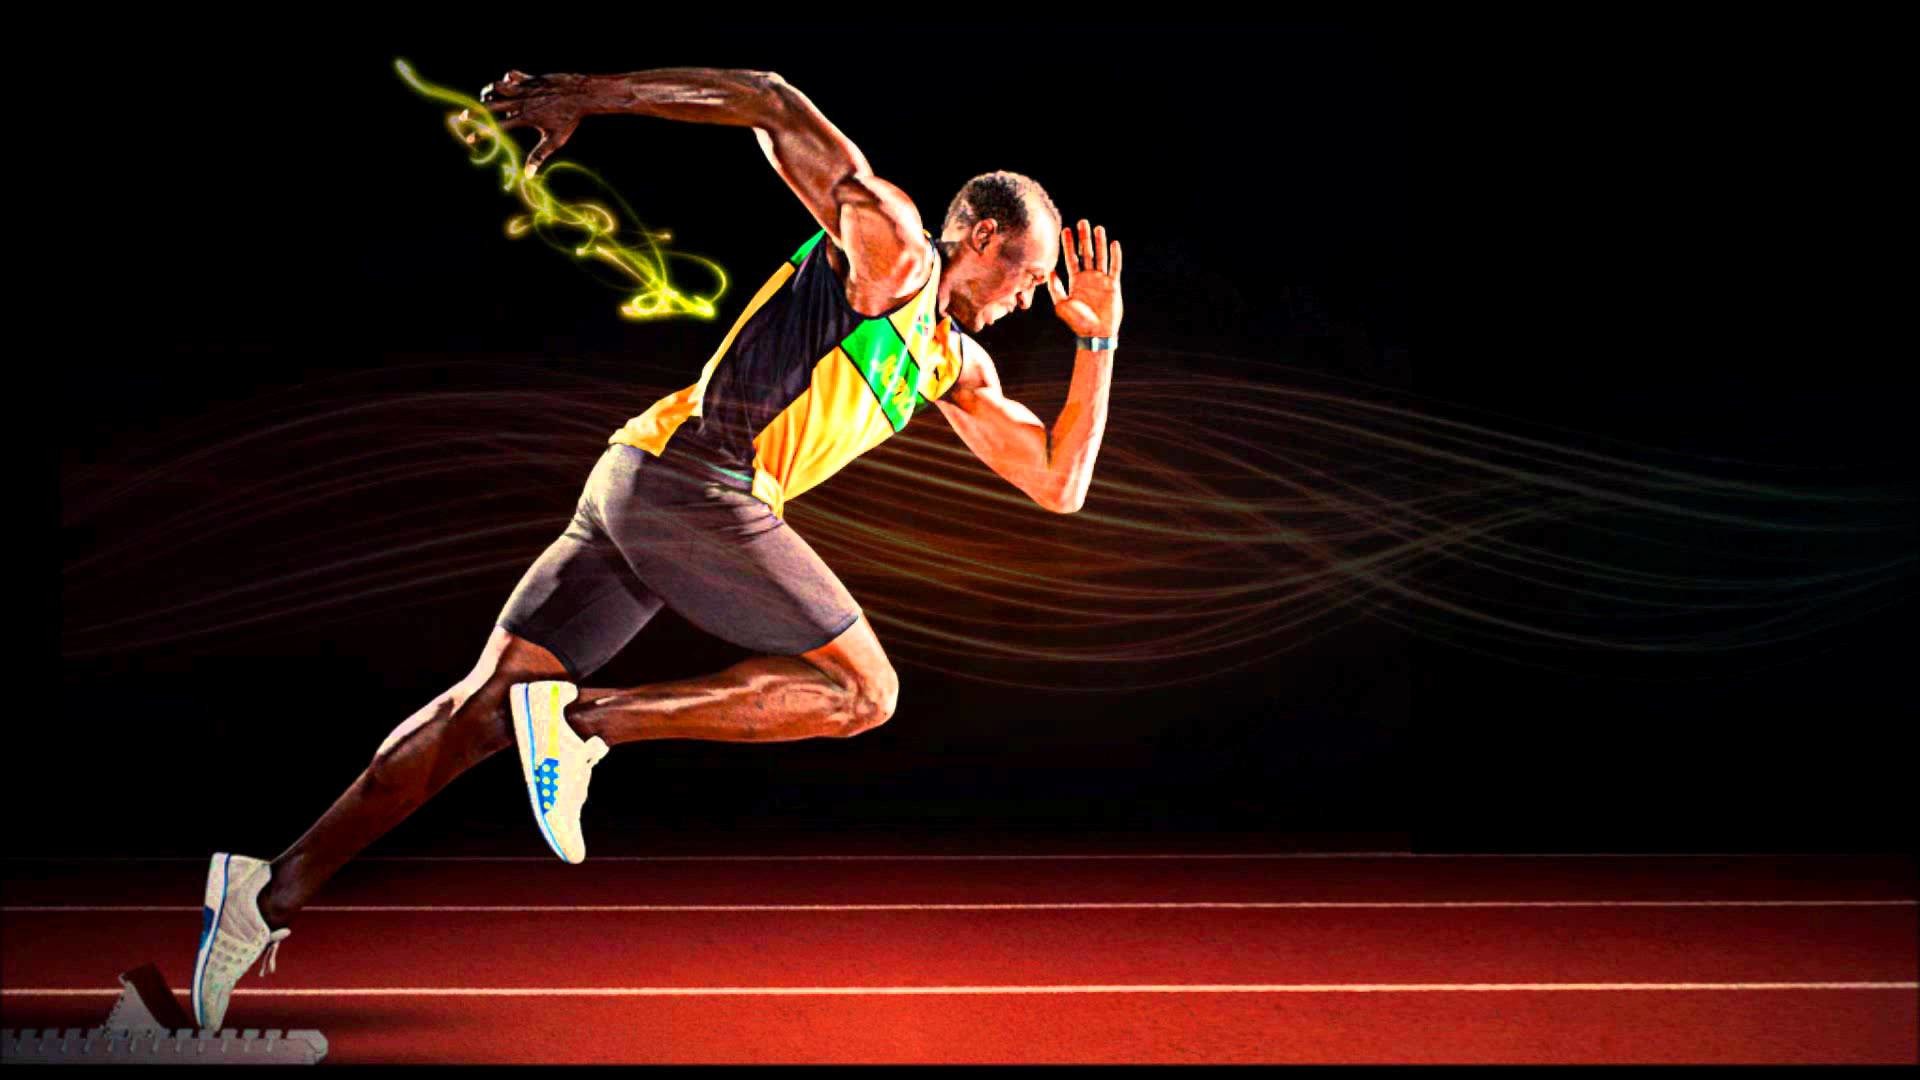 1920x1080 Images For > Usain Bolt Running Wallpaper